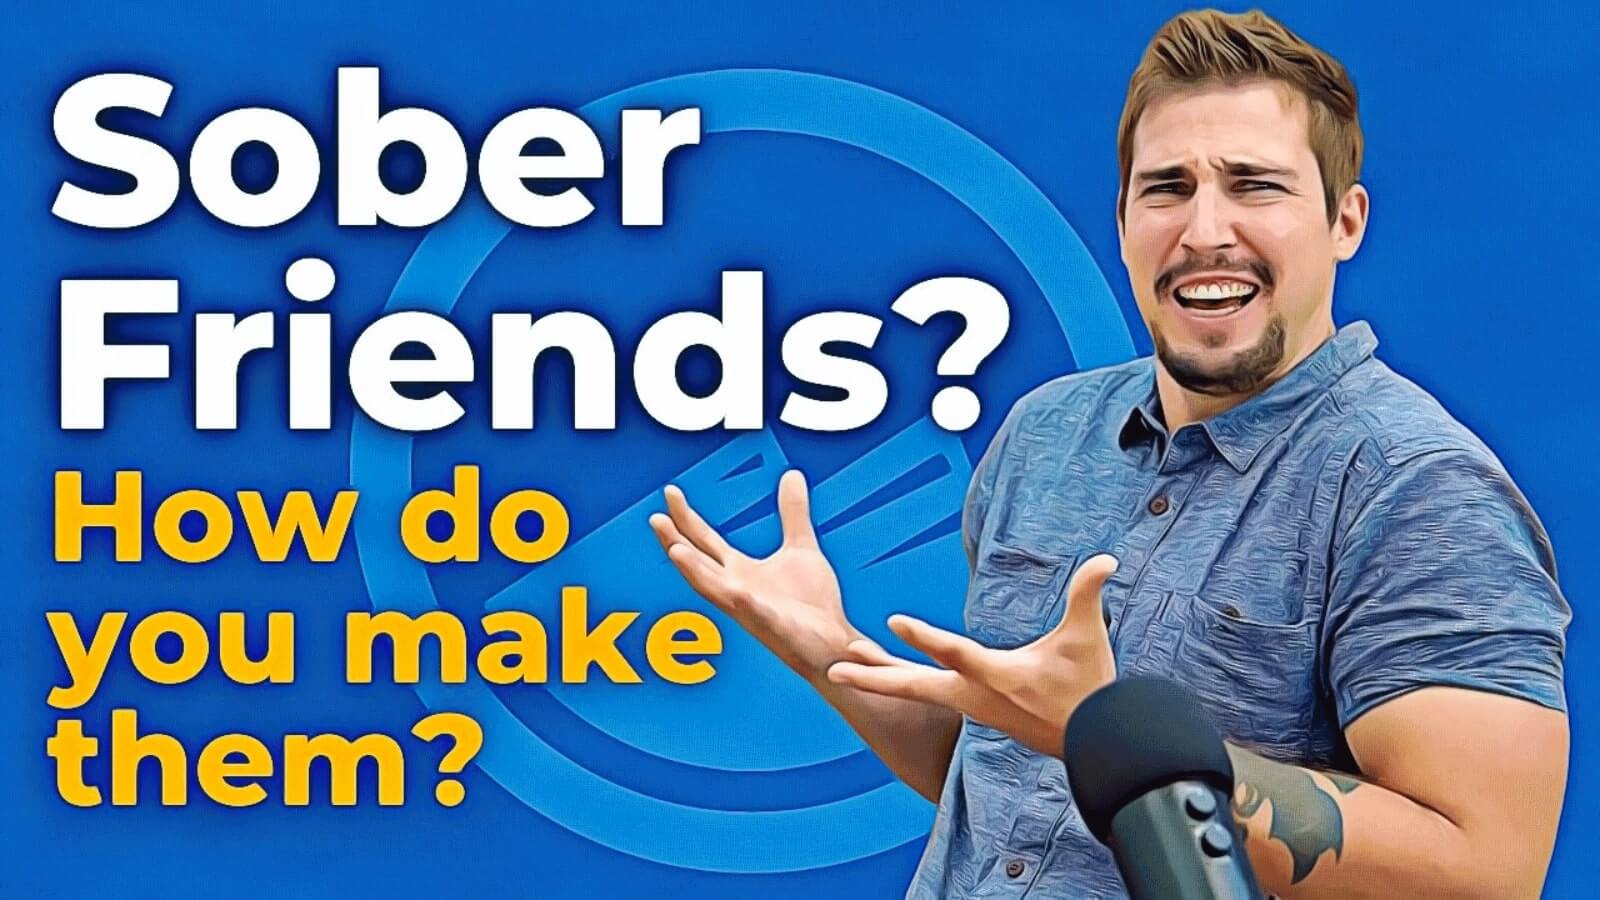 Sober friends? How do you make them? text written next to an image of a man